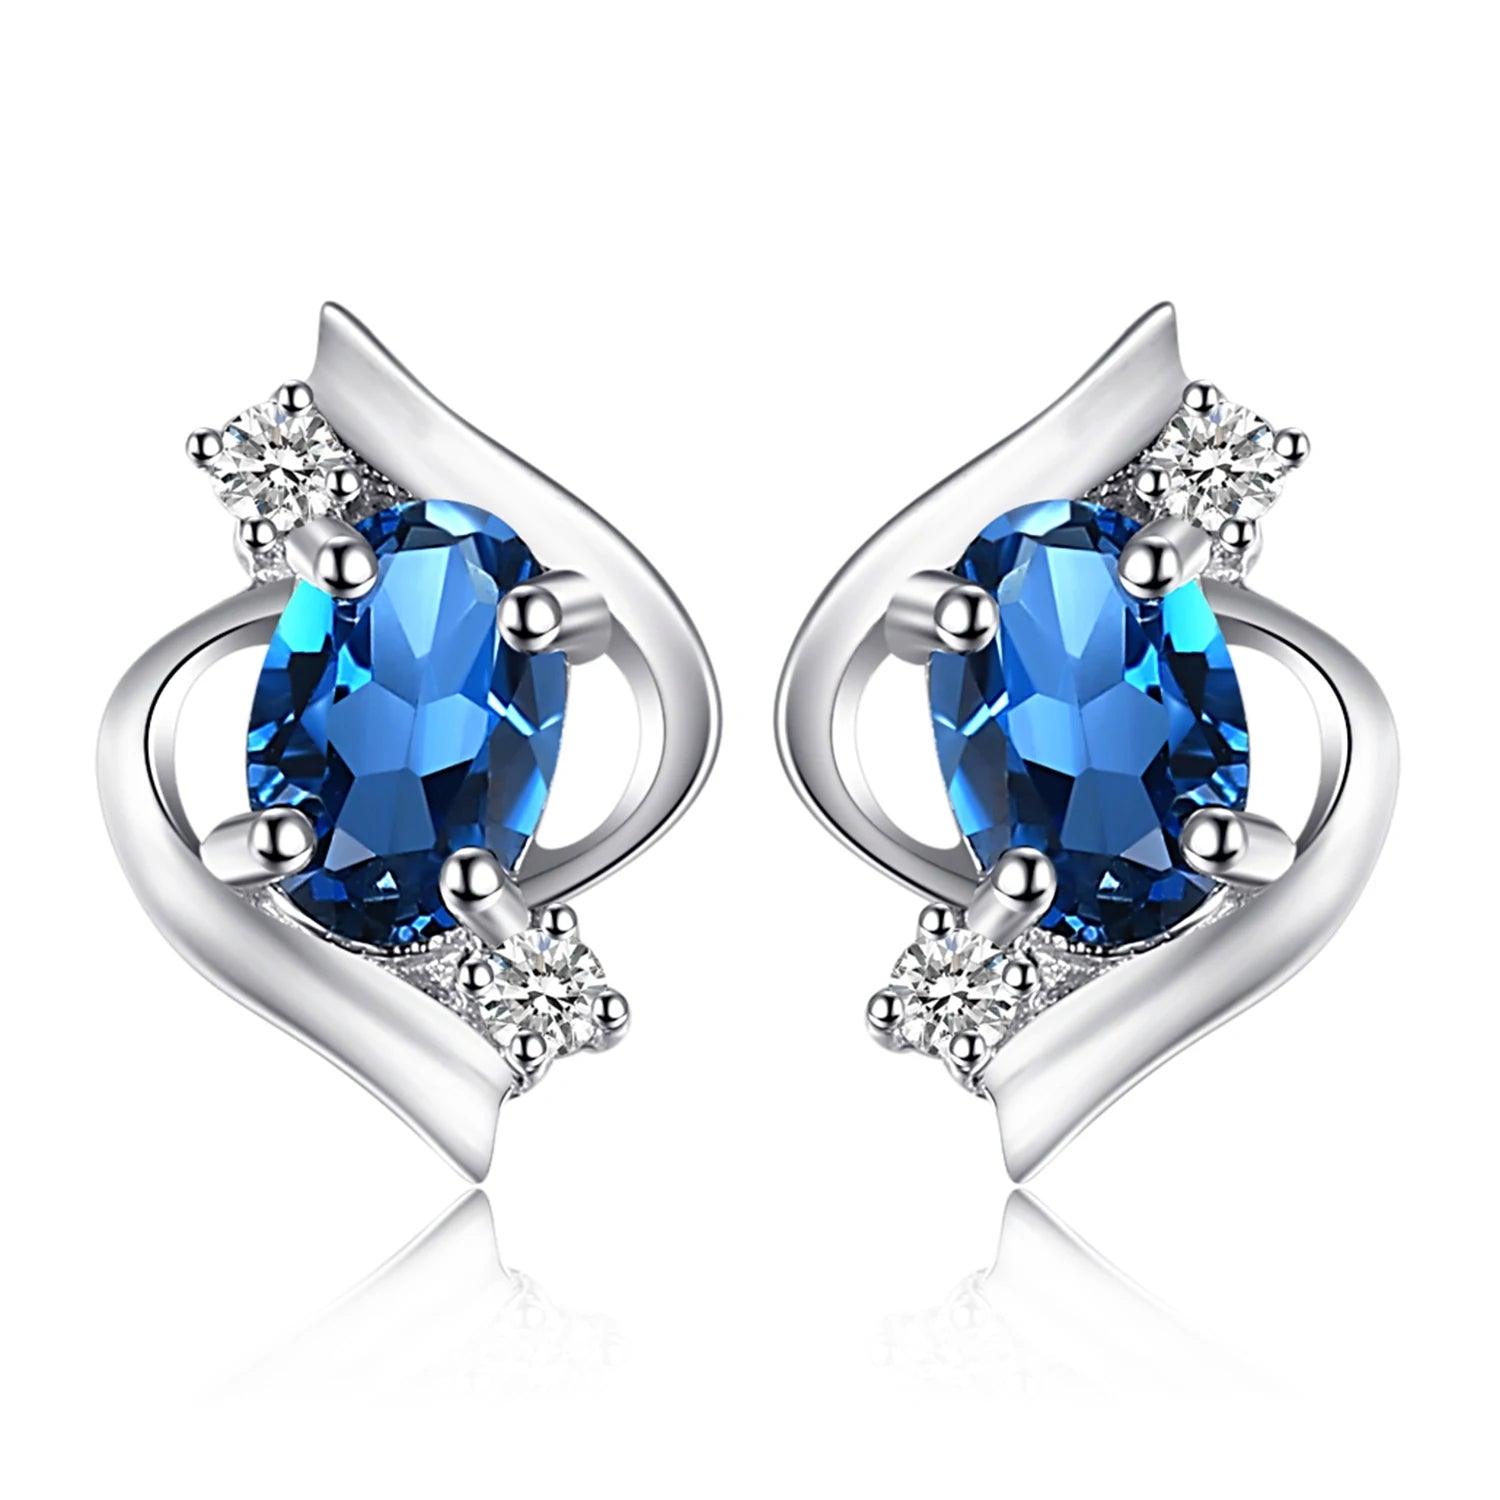 JAECJ514 Stud Earring Charm Jewelry - London Blue Topaz, 925 Sterling Silver - Touchy Style